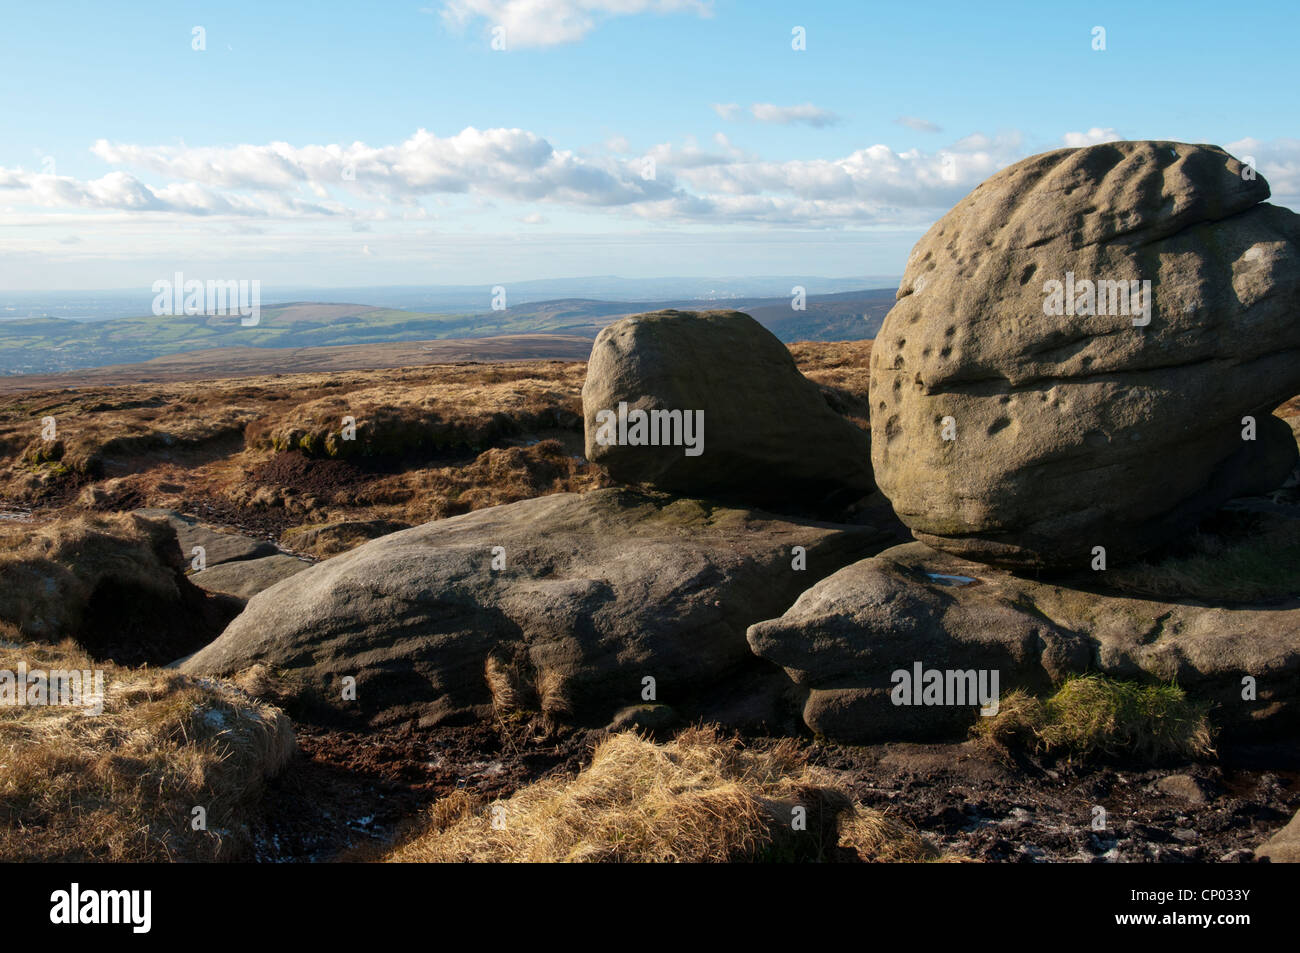 Millstone grit (a type of sandstone) rocks near Bleaklow Head, Peak District, Derbyshire, England, UK Stock Photo